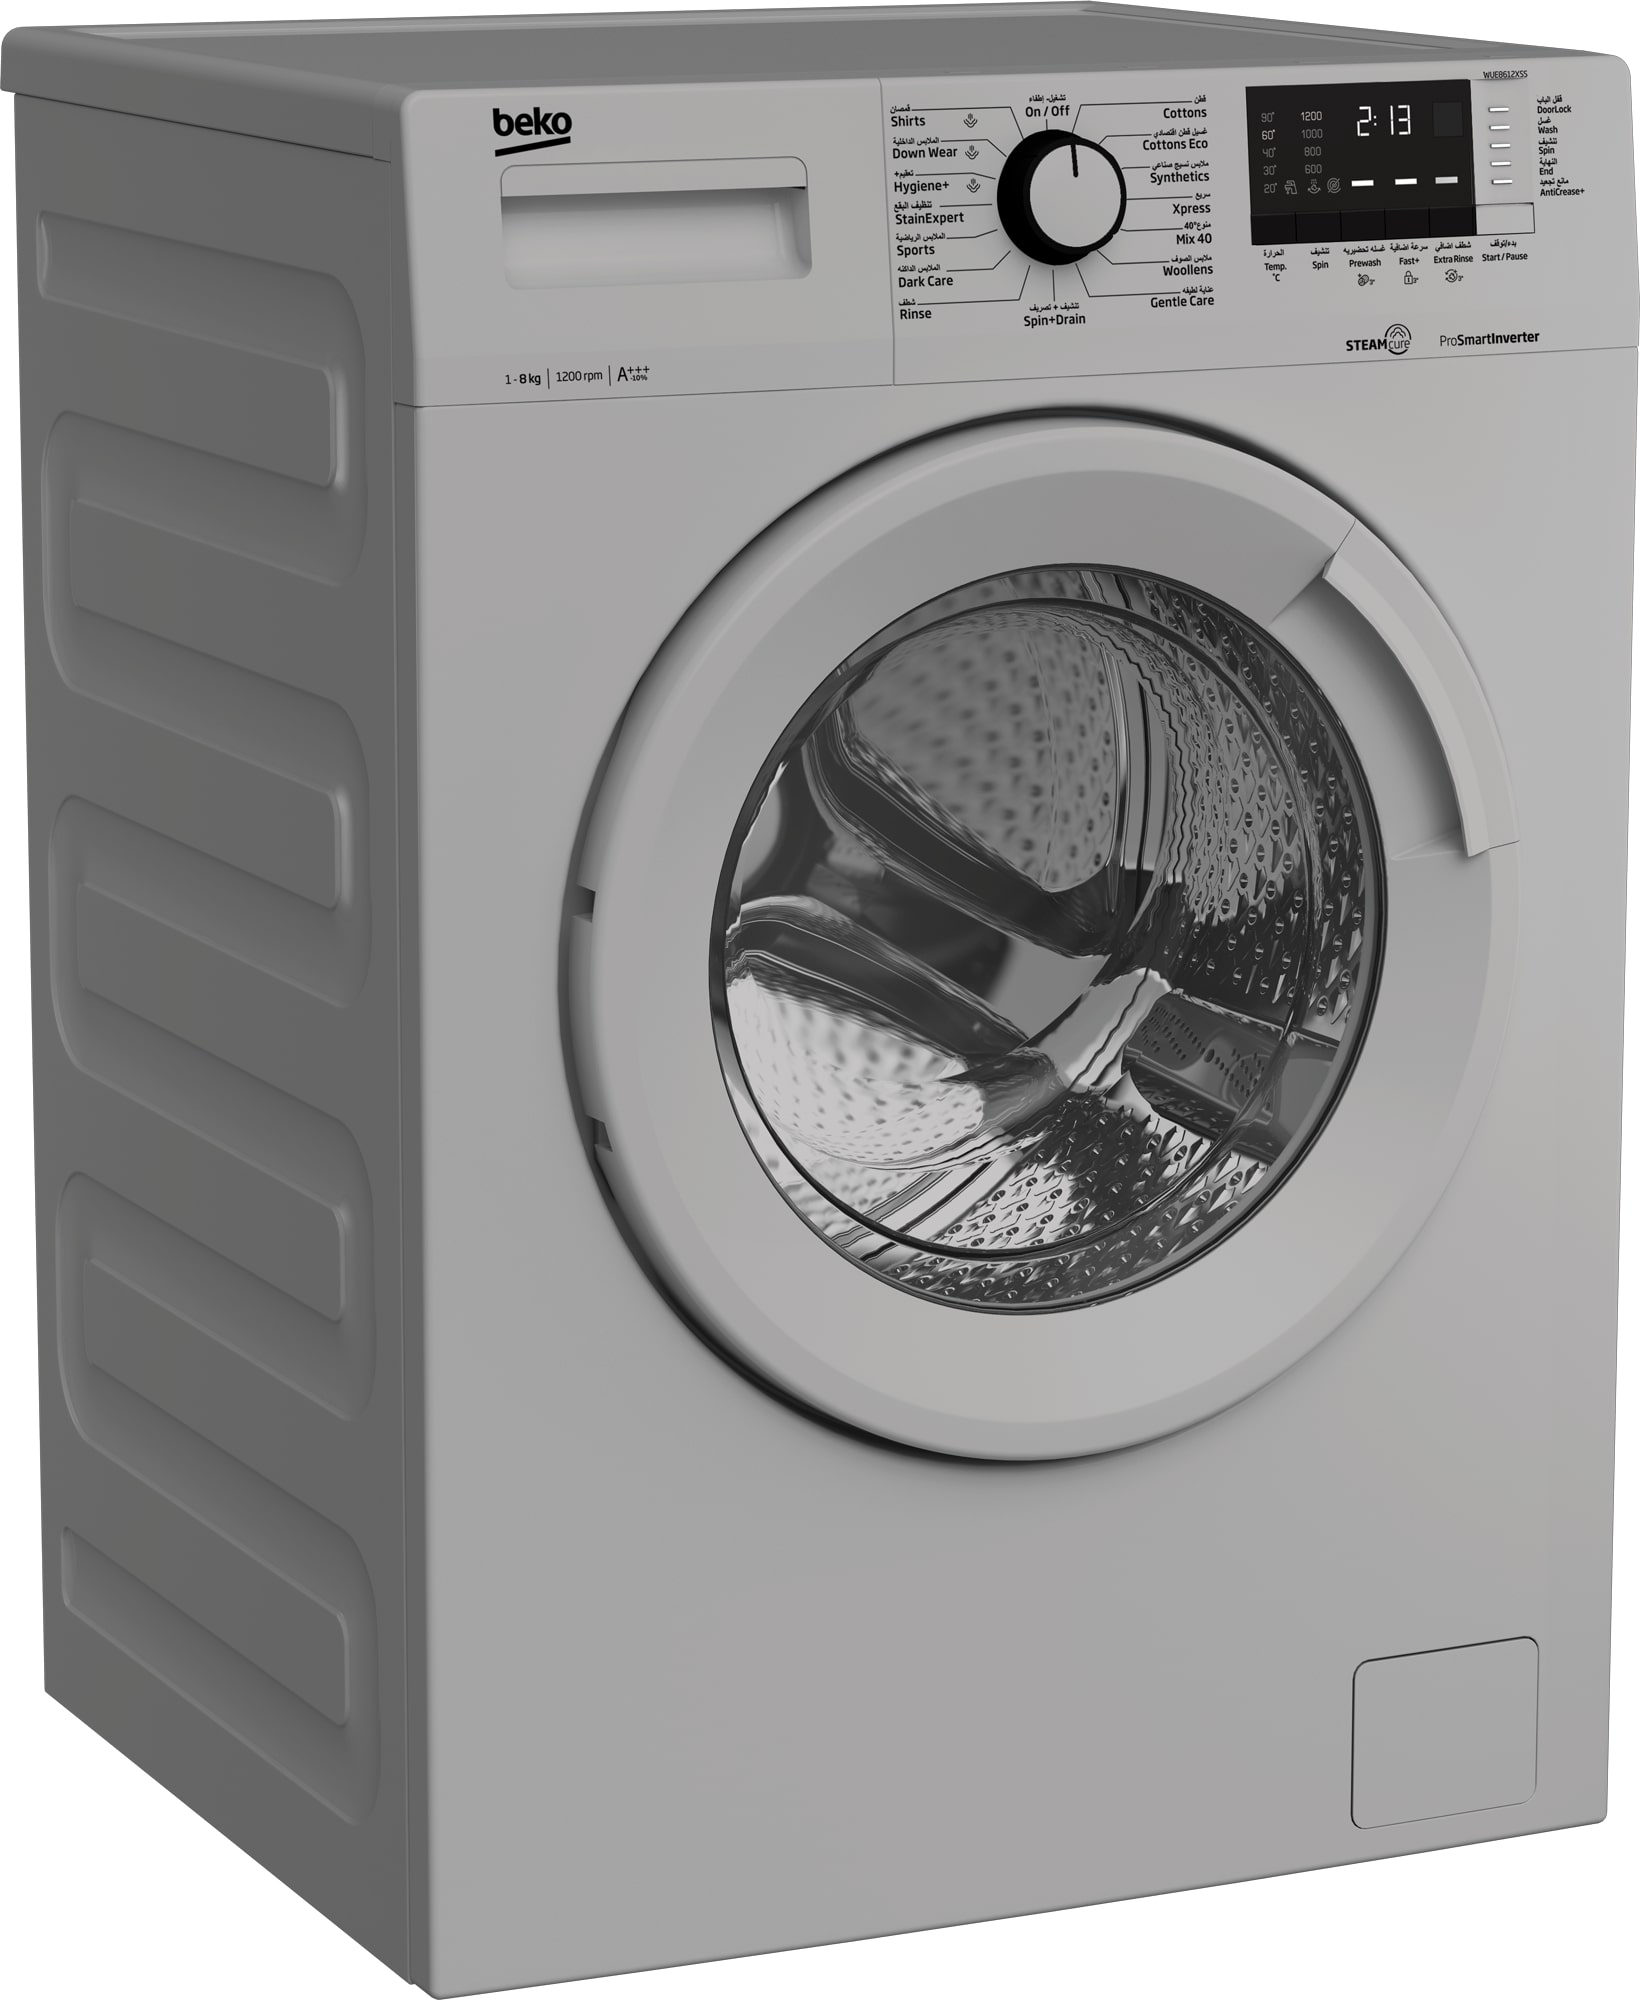 Beko Washing Machine 8 kg 1200 rpm